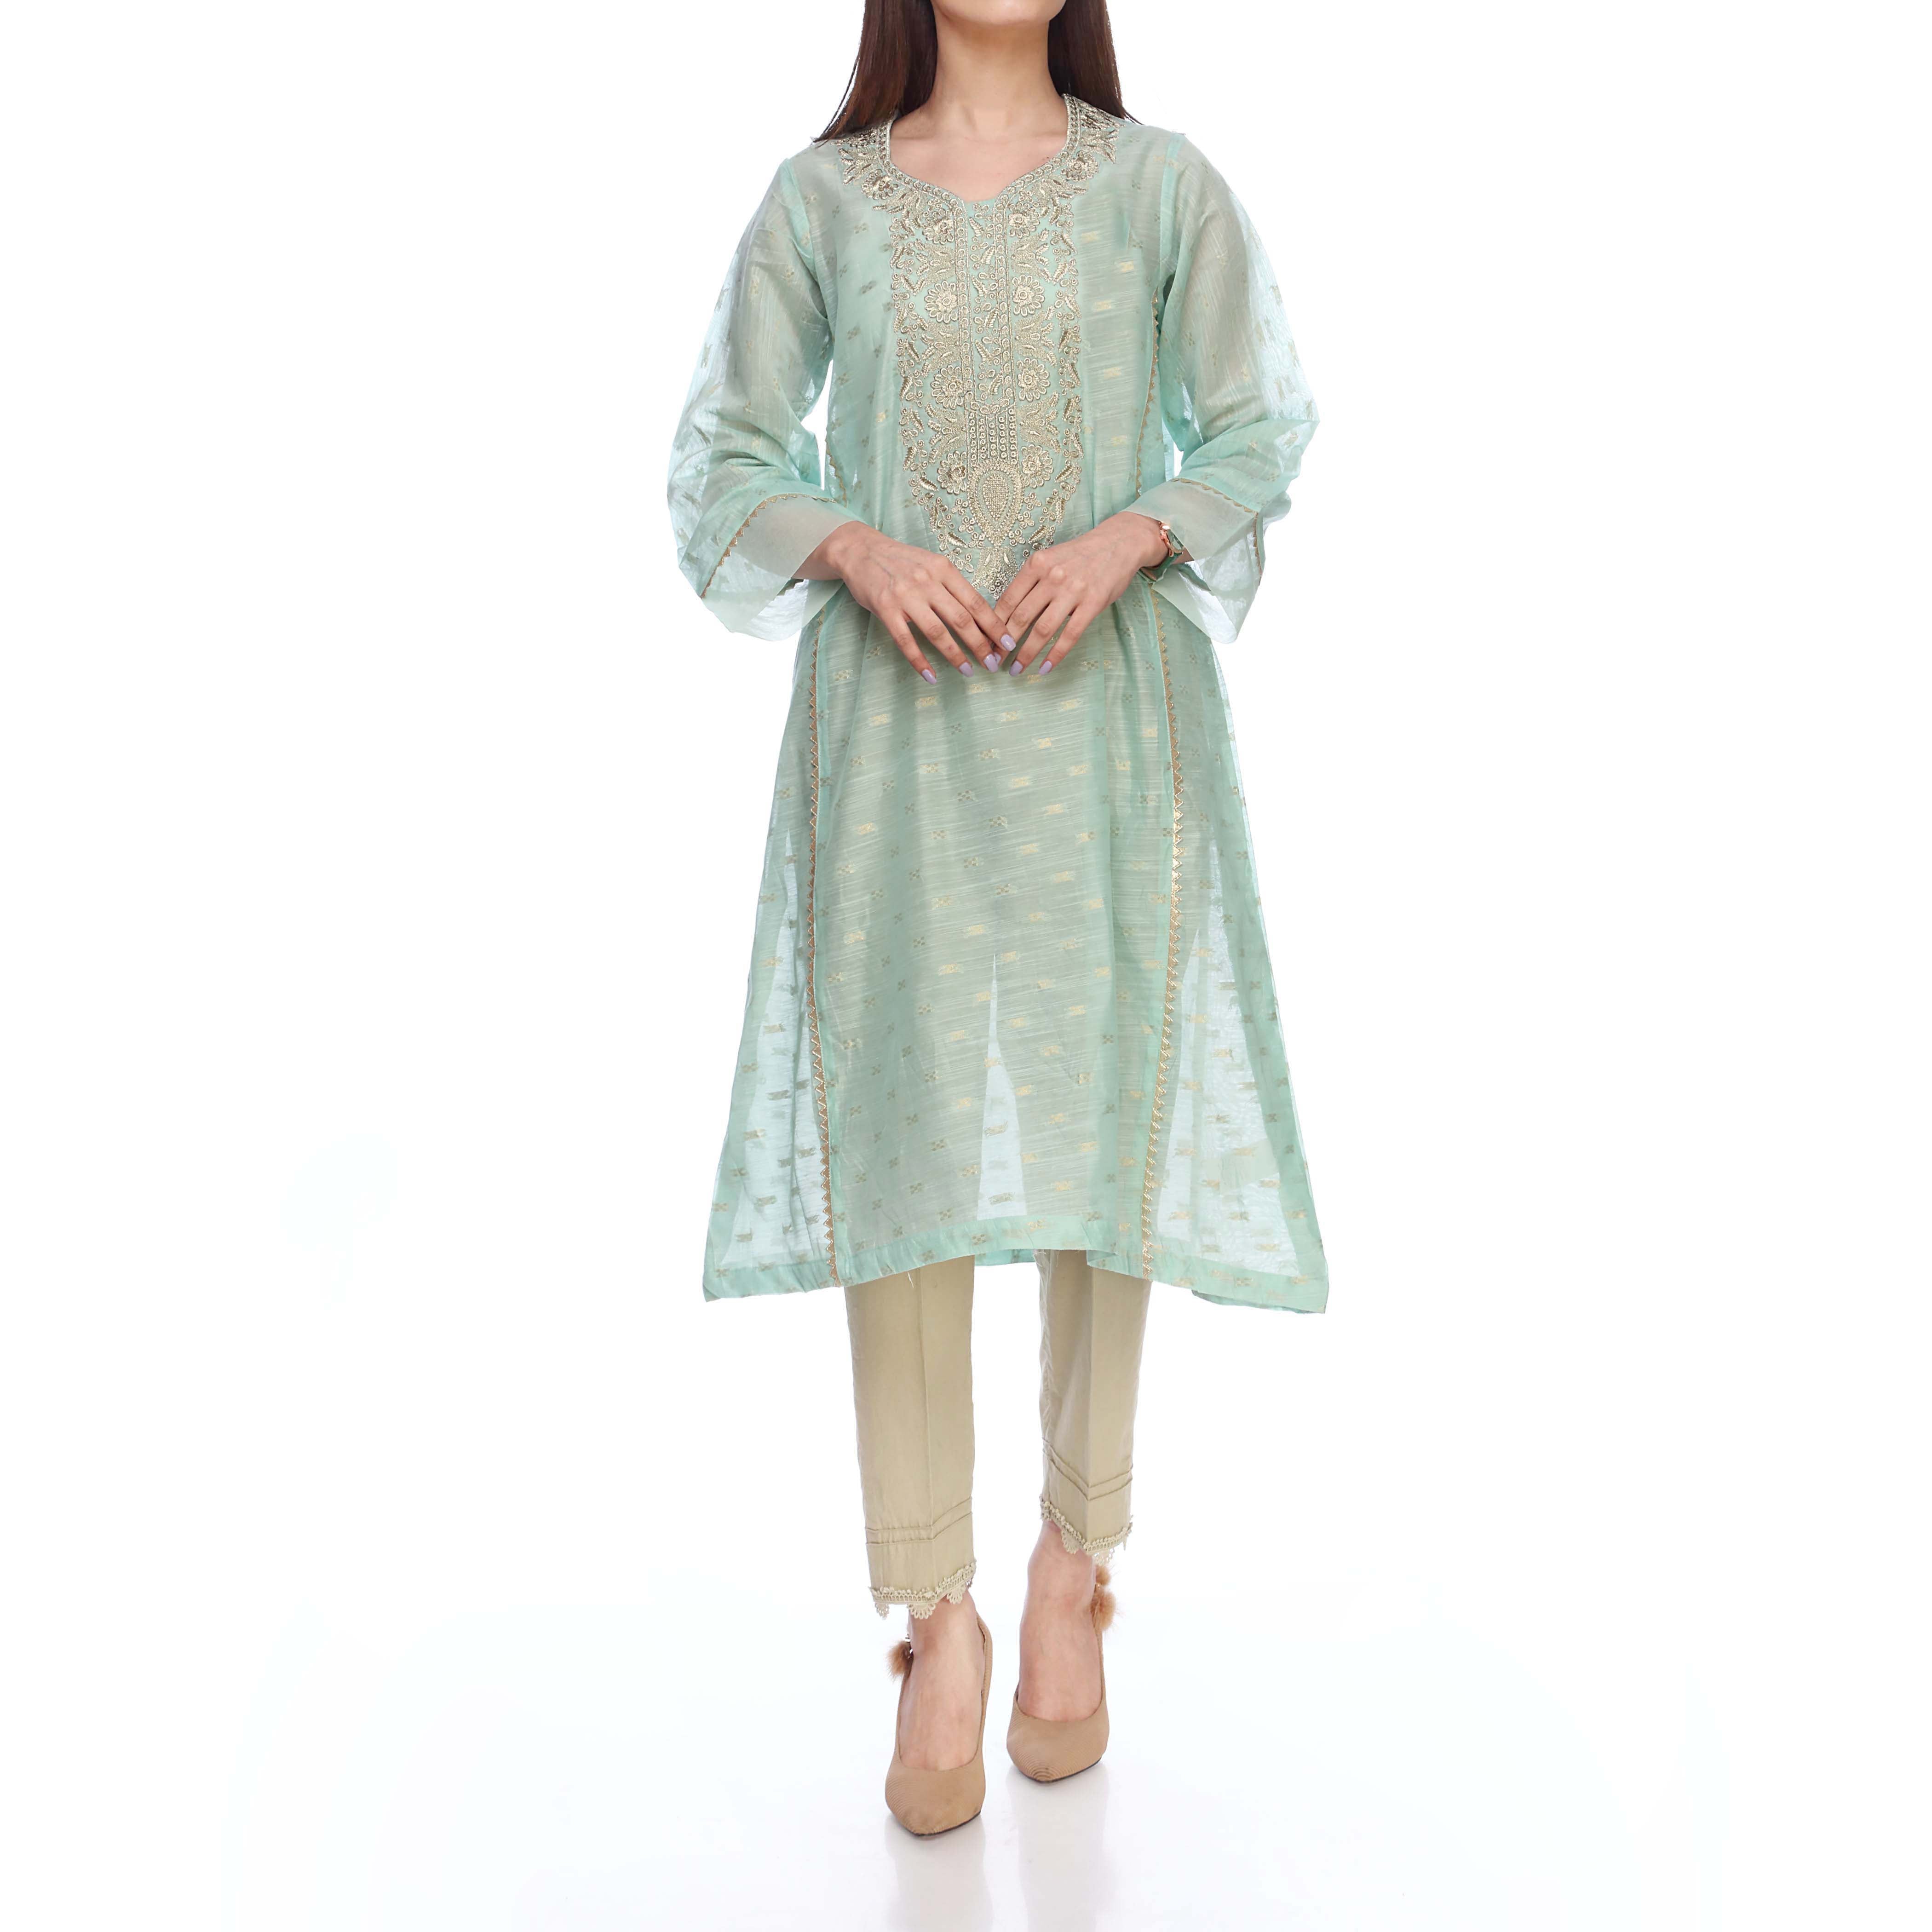 Seagreen Color Embellished Cotton Zari Shirt PS2245